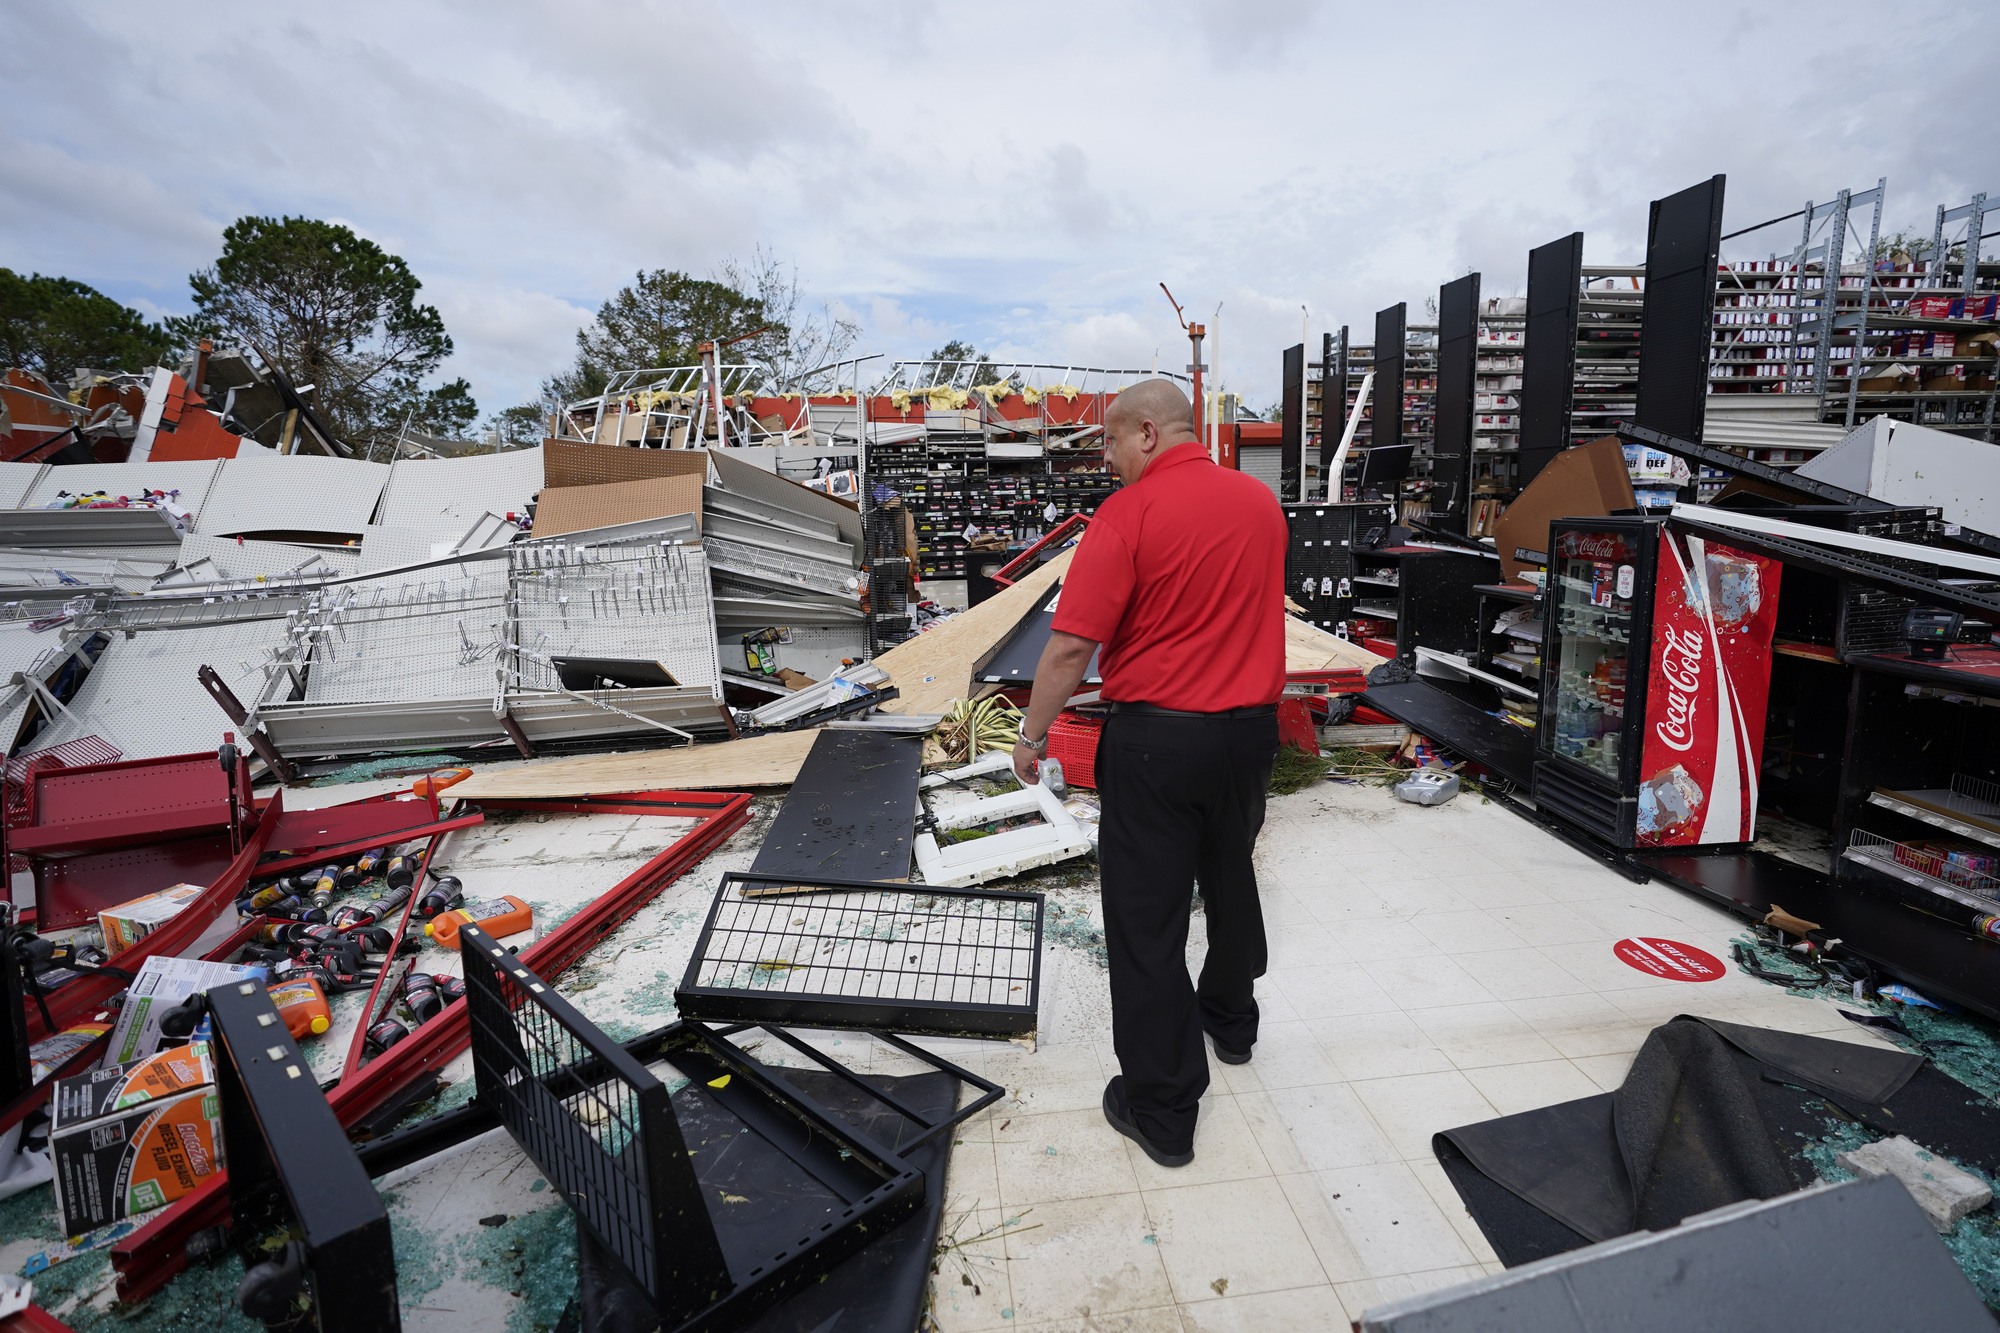 Surveying damage from Hurricane Laura